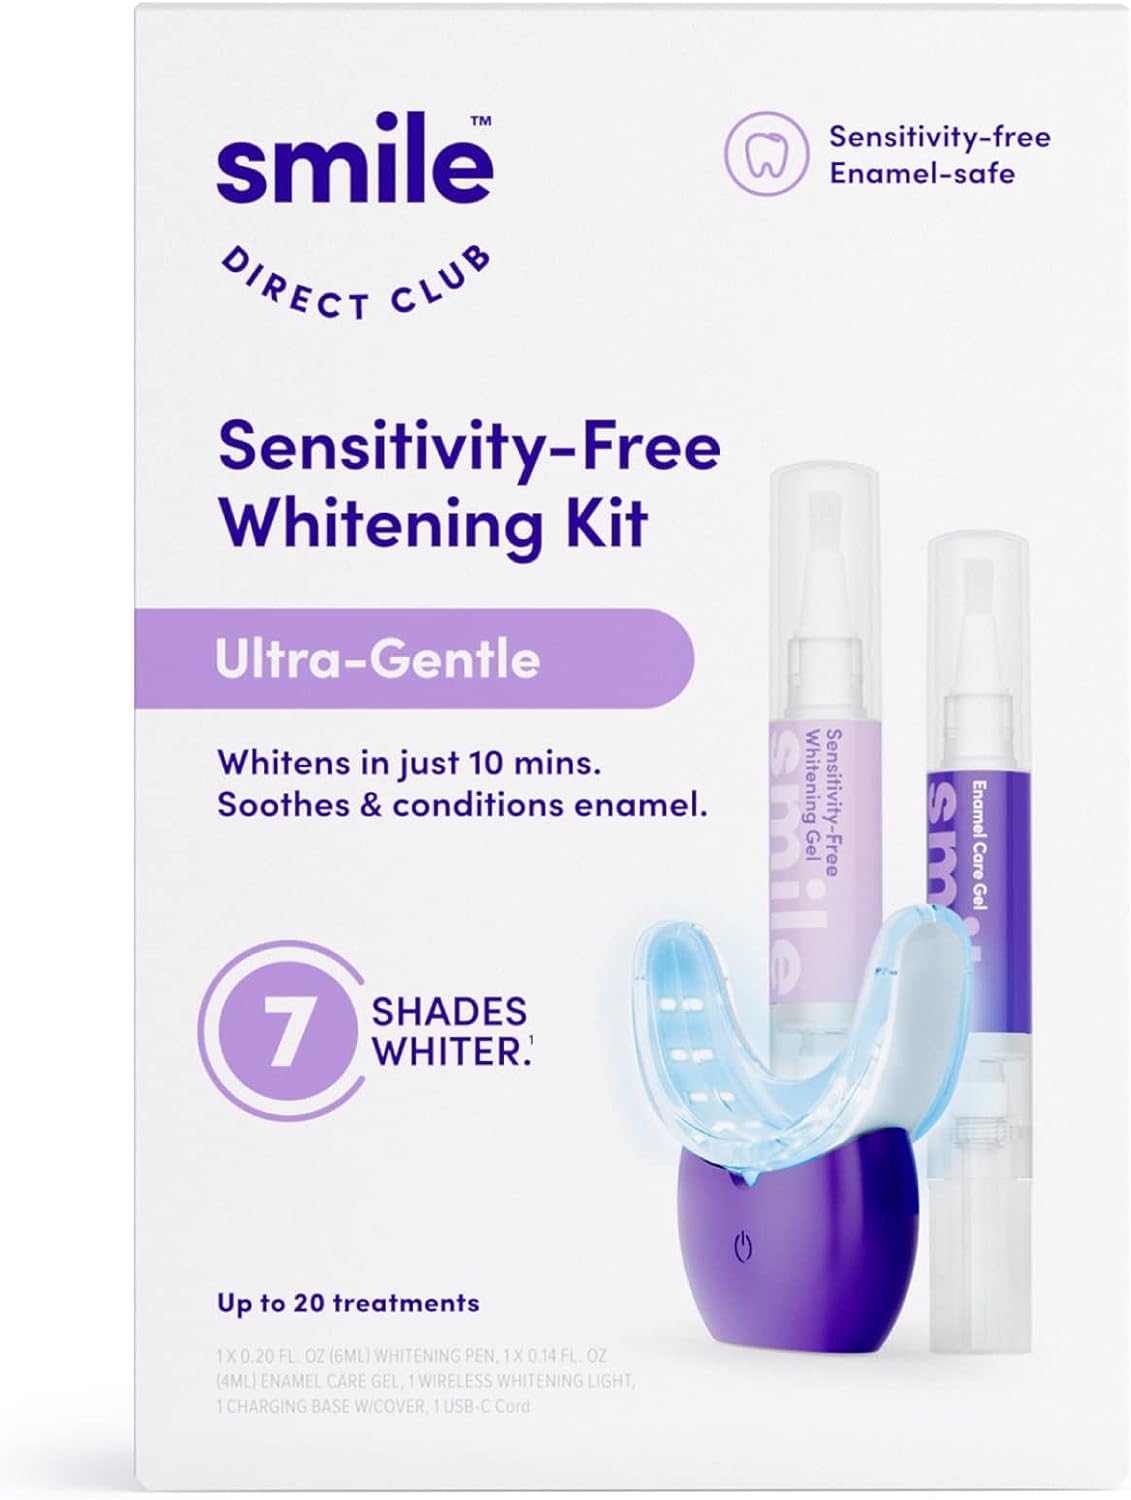 Smile Direct Club LED Whitening Kit for whitening sensitive teeth.